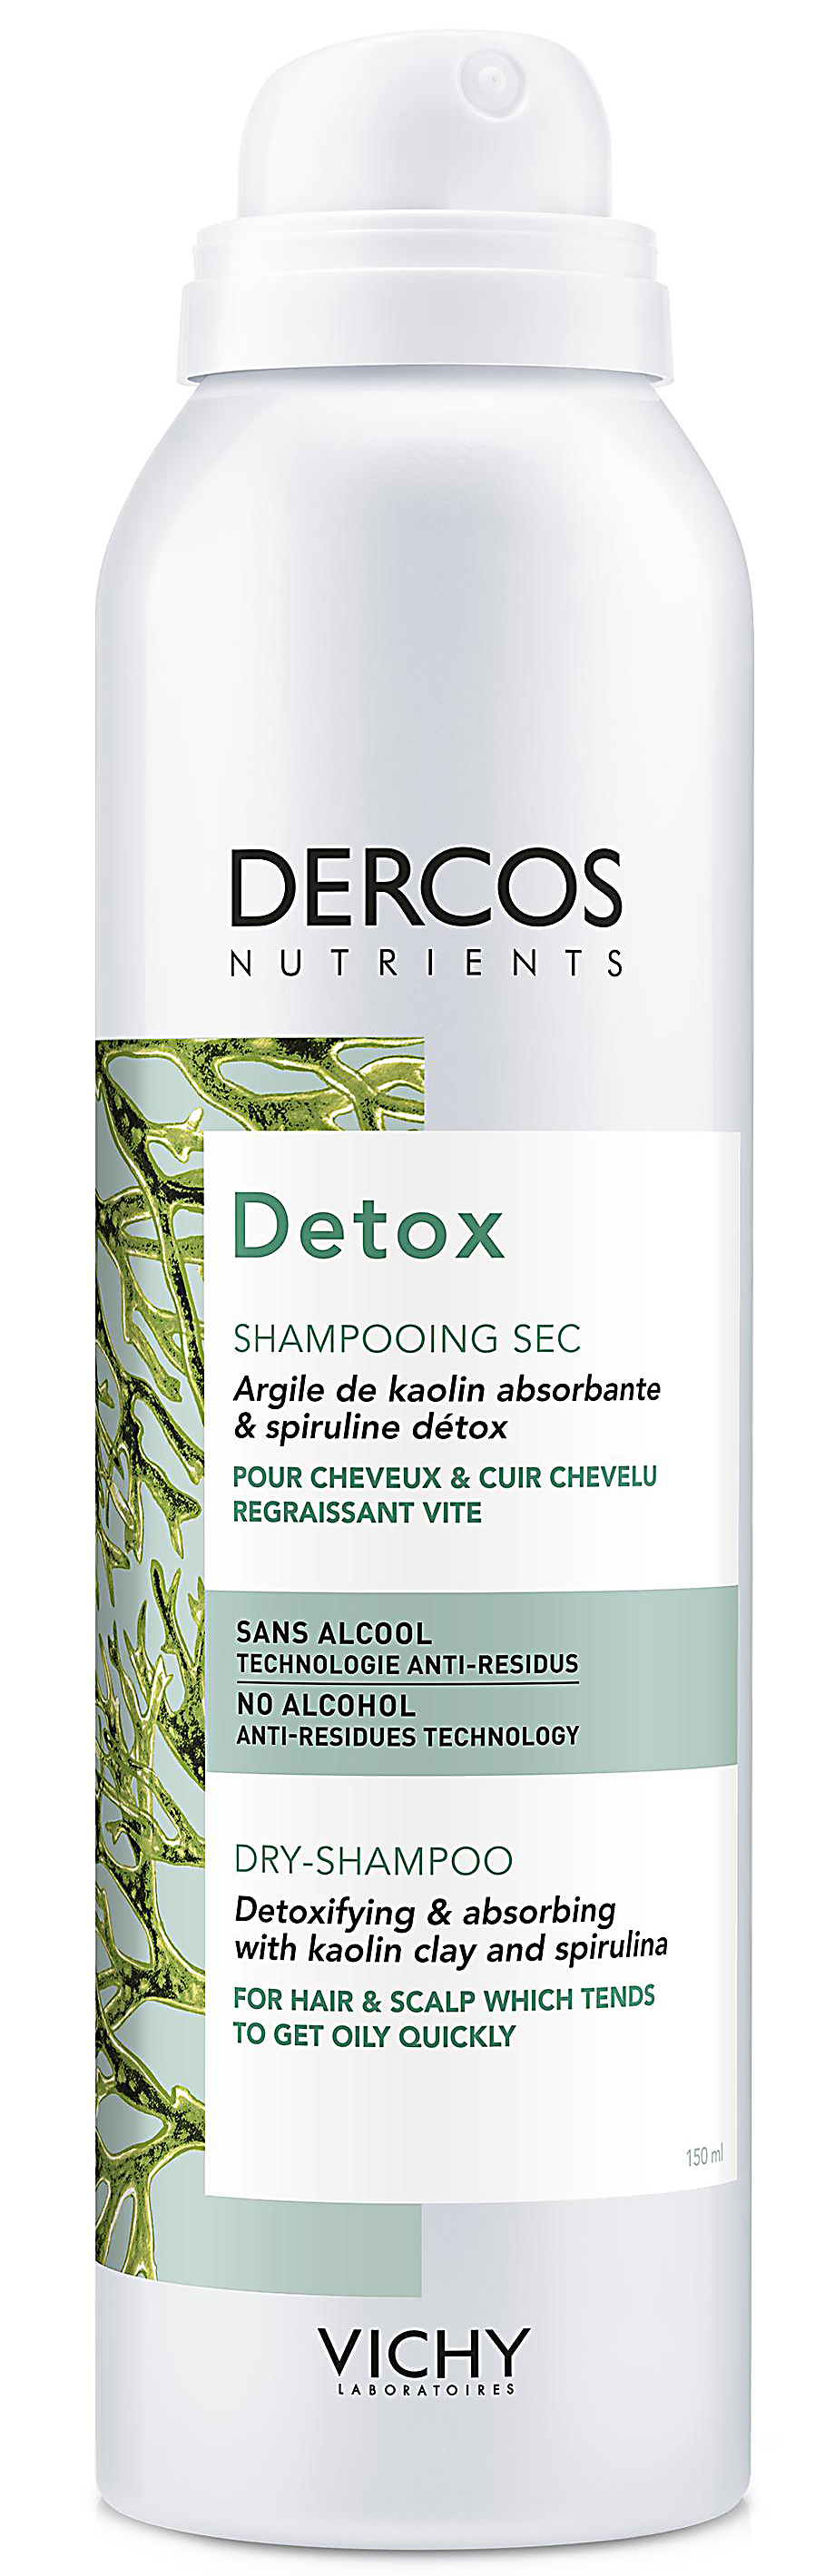 Dercos nutrients detox шампунь сухой 150мл Vichy (Виши)